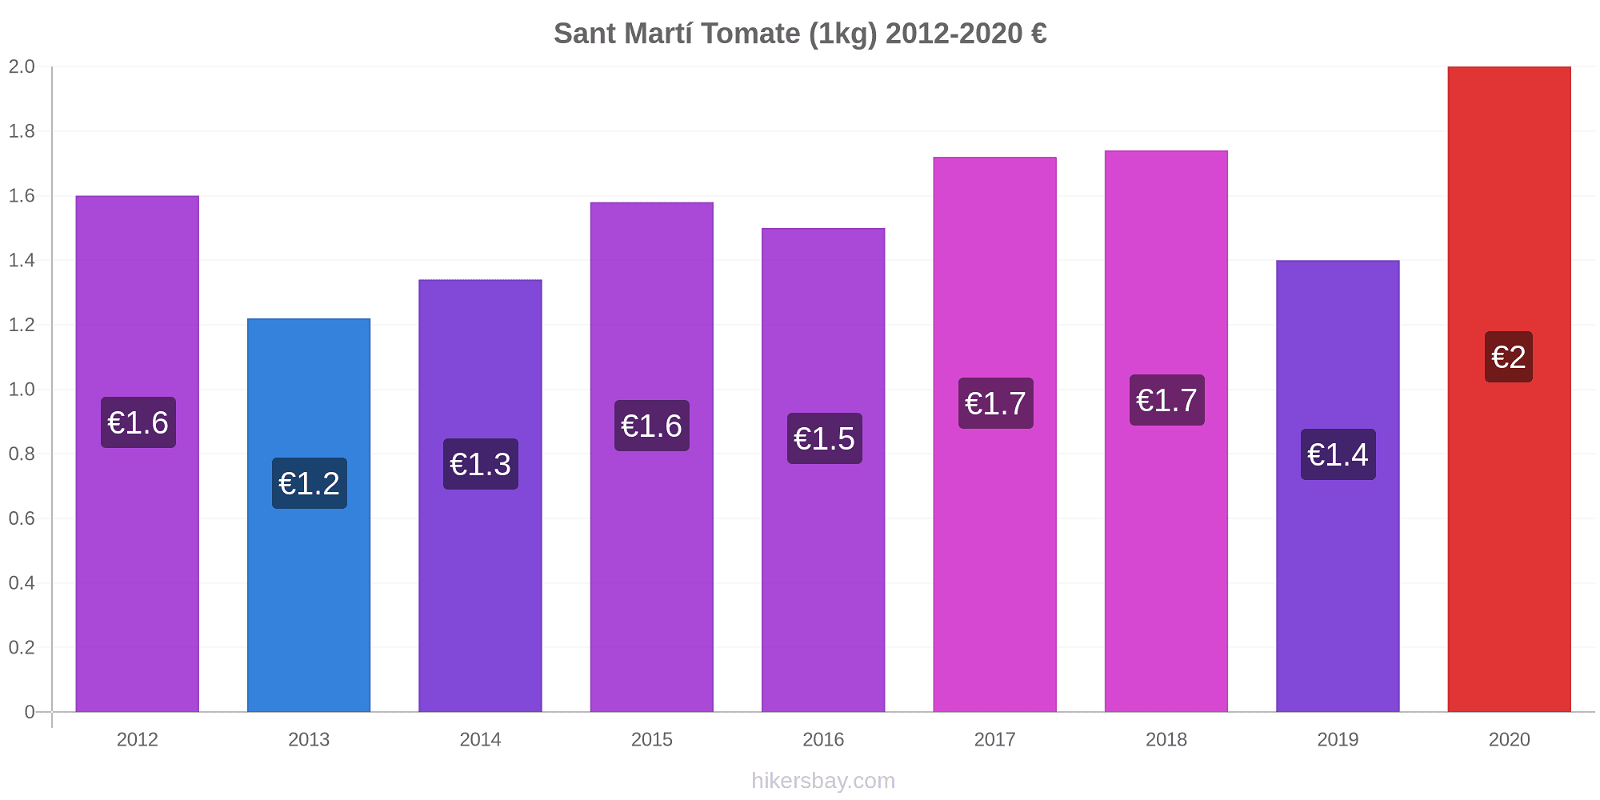 Sant Martí changements de prix Tomate (1kg) hikersbay.com